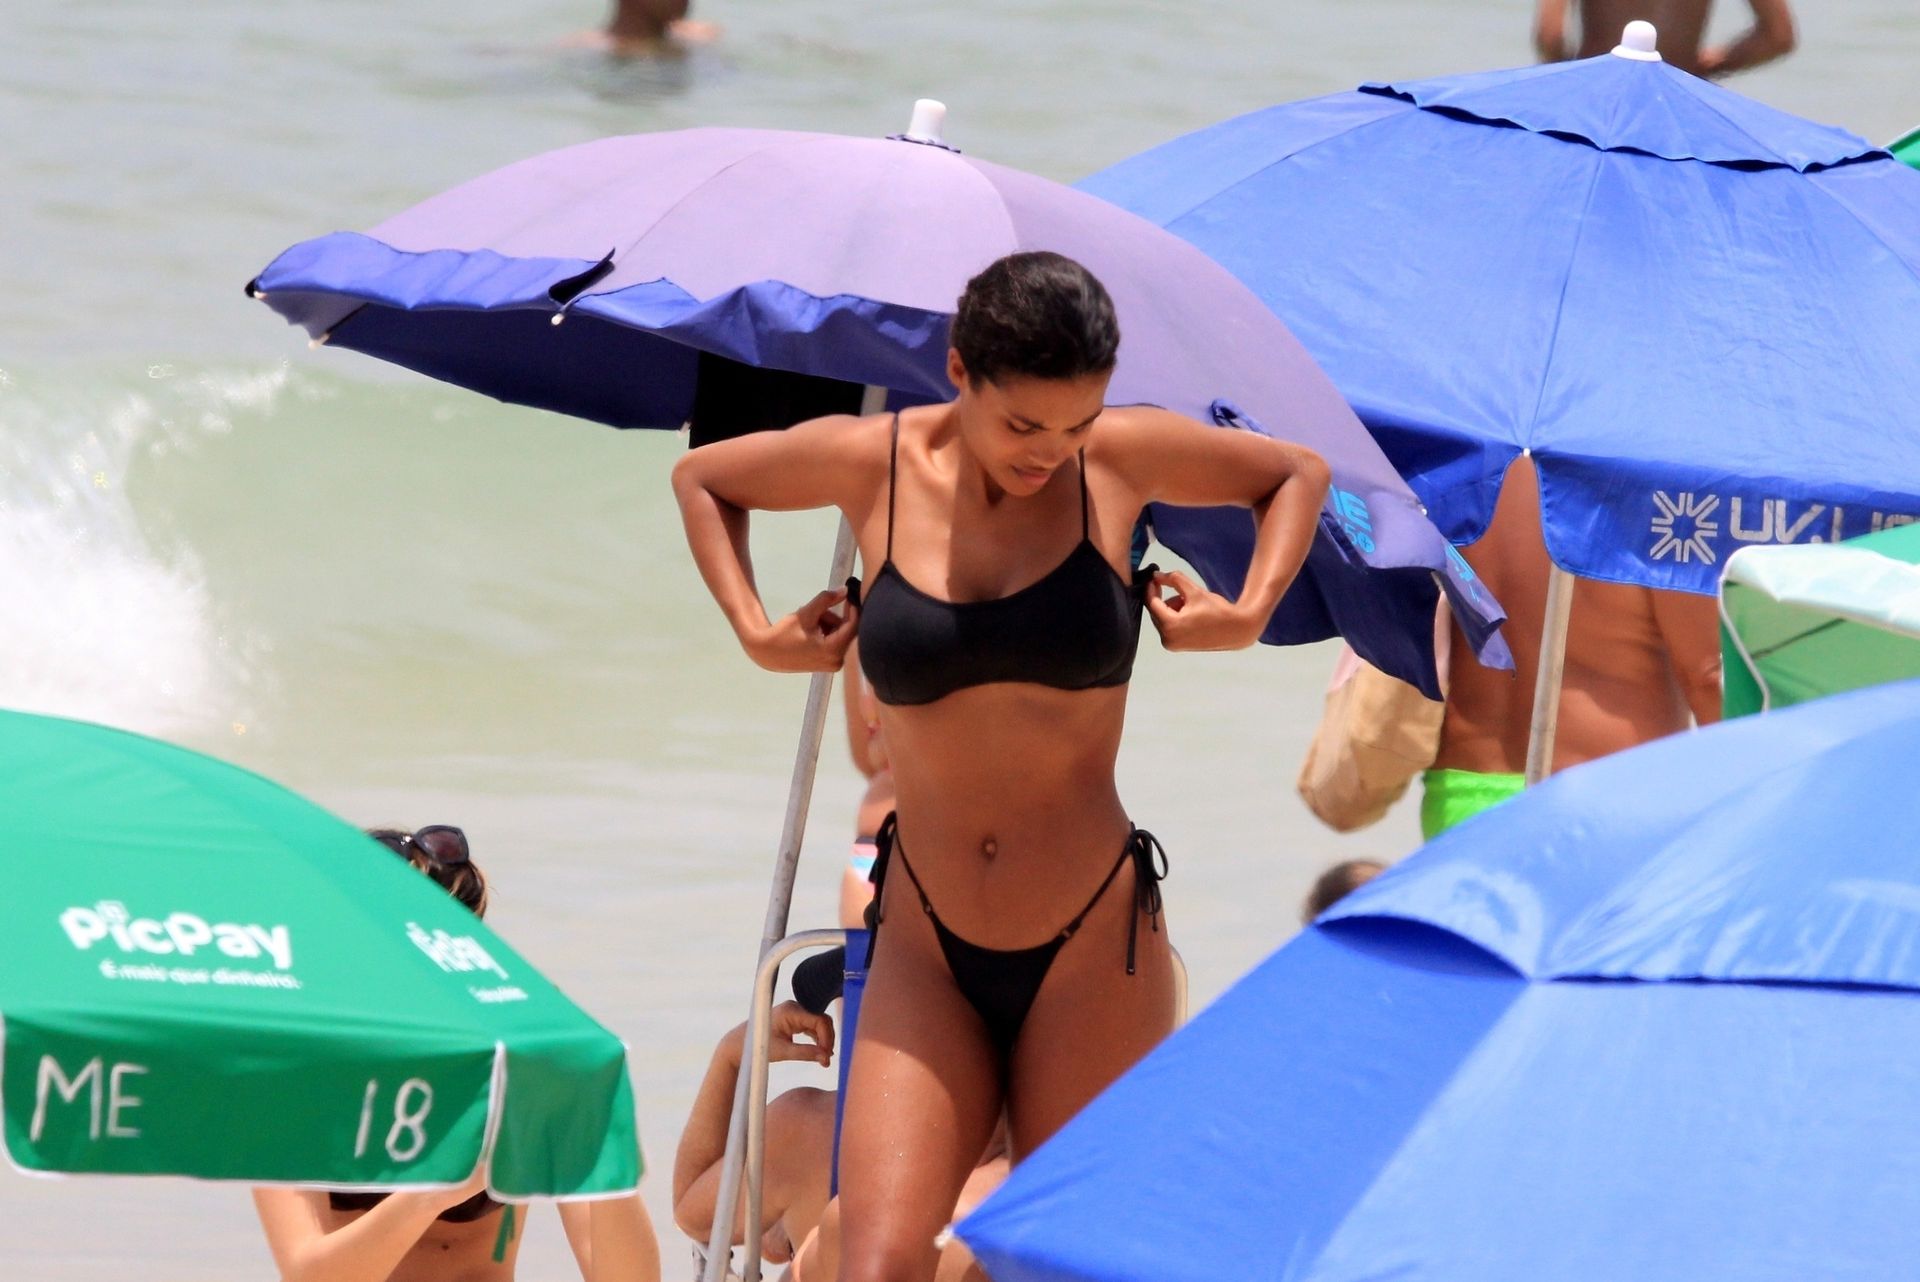 Sexy Tina Kunakey Enjoys Her Vacation In Rio De Janeiro 0070